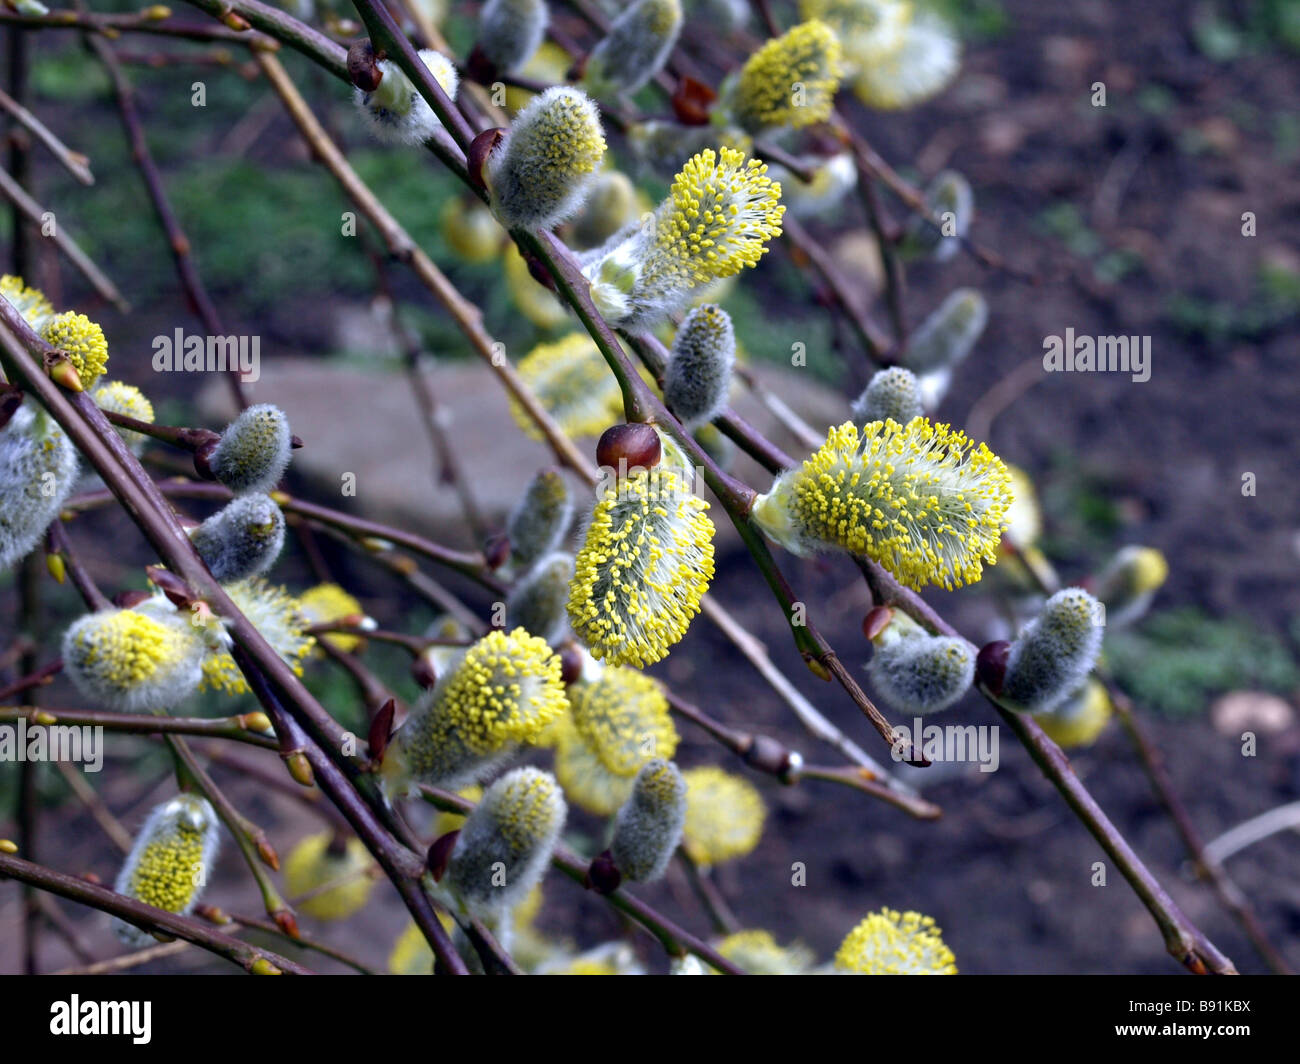 Salix caprea willow tree,march catkins. Stock Photo